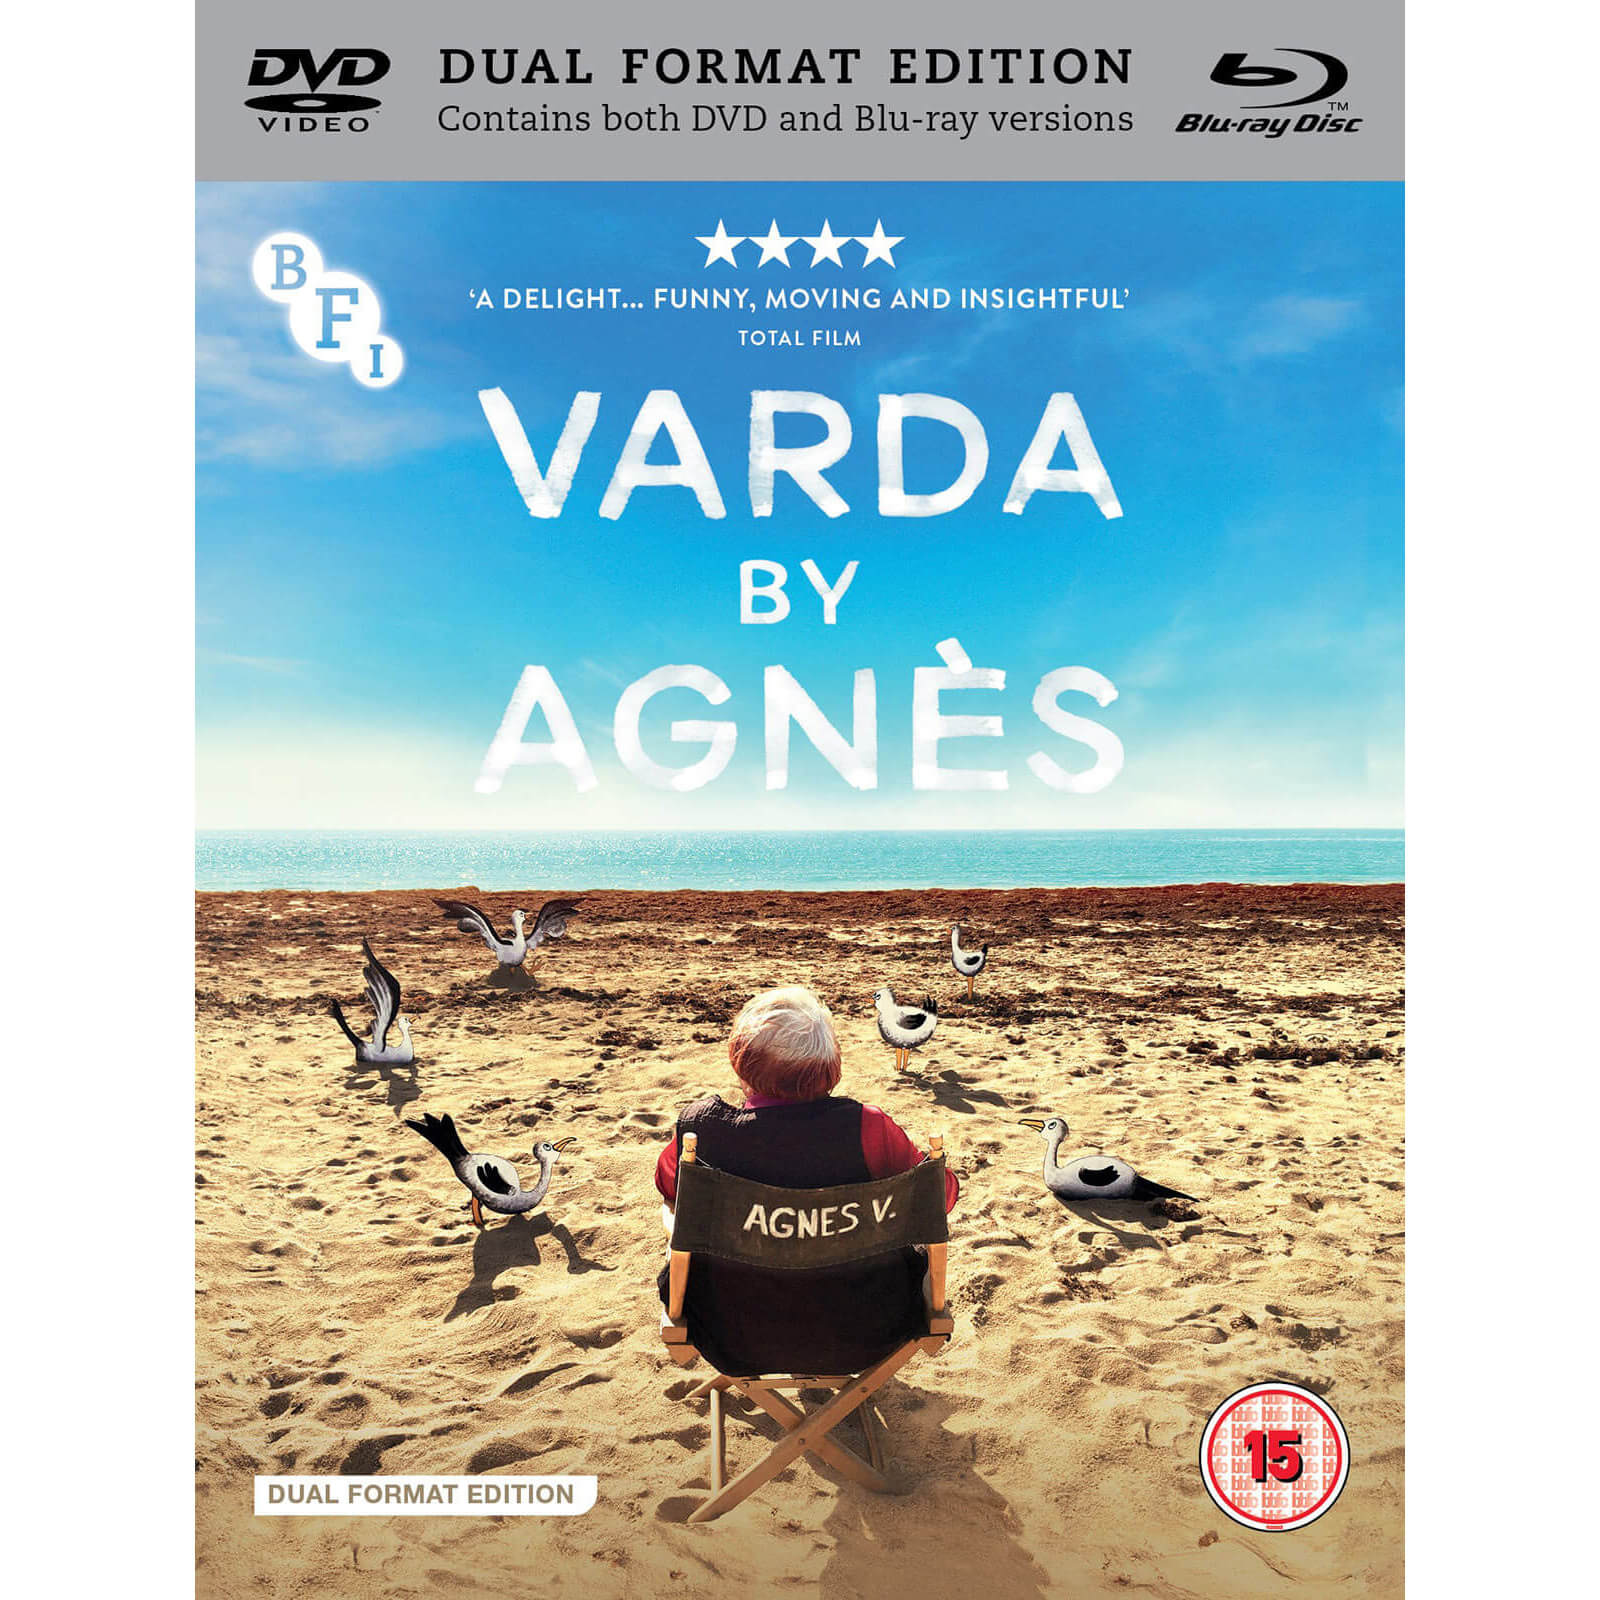 Varda von Agnes - Doppelformat von BFI